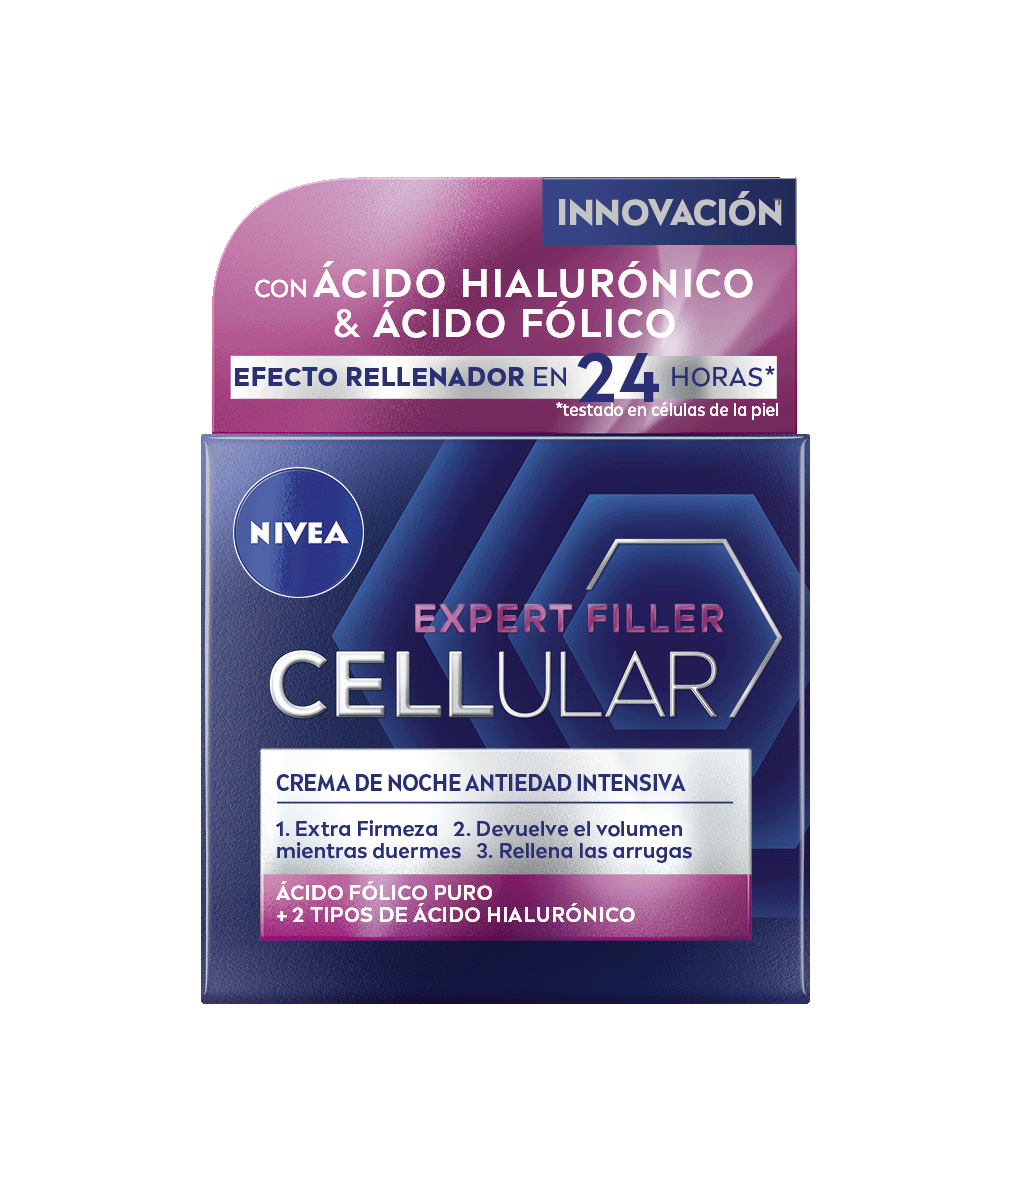 NIVEA Cellular Expert Filler Crema de Noche